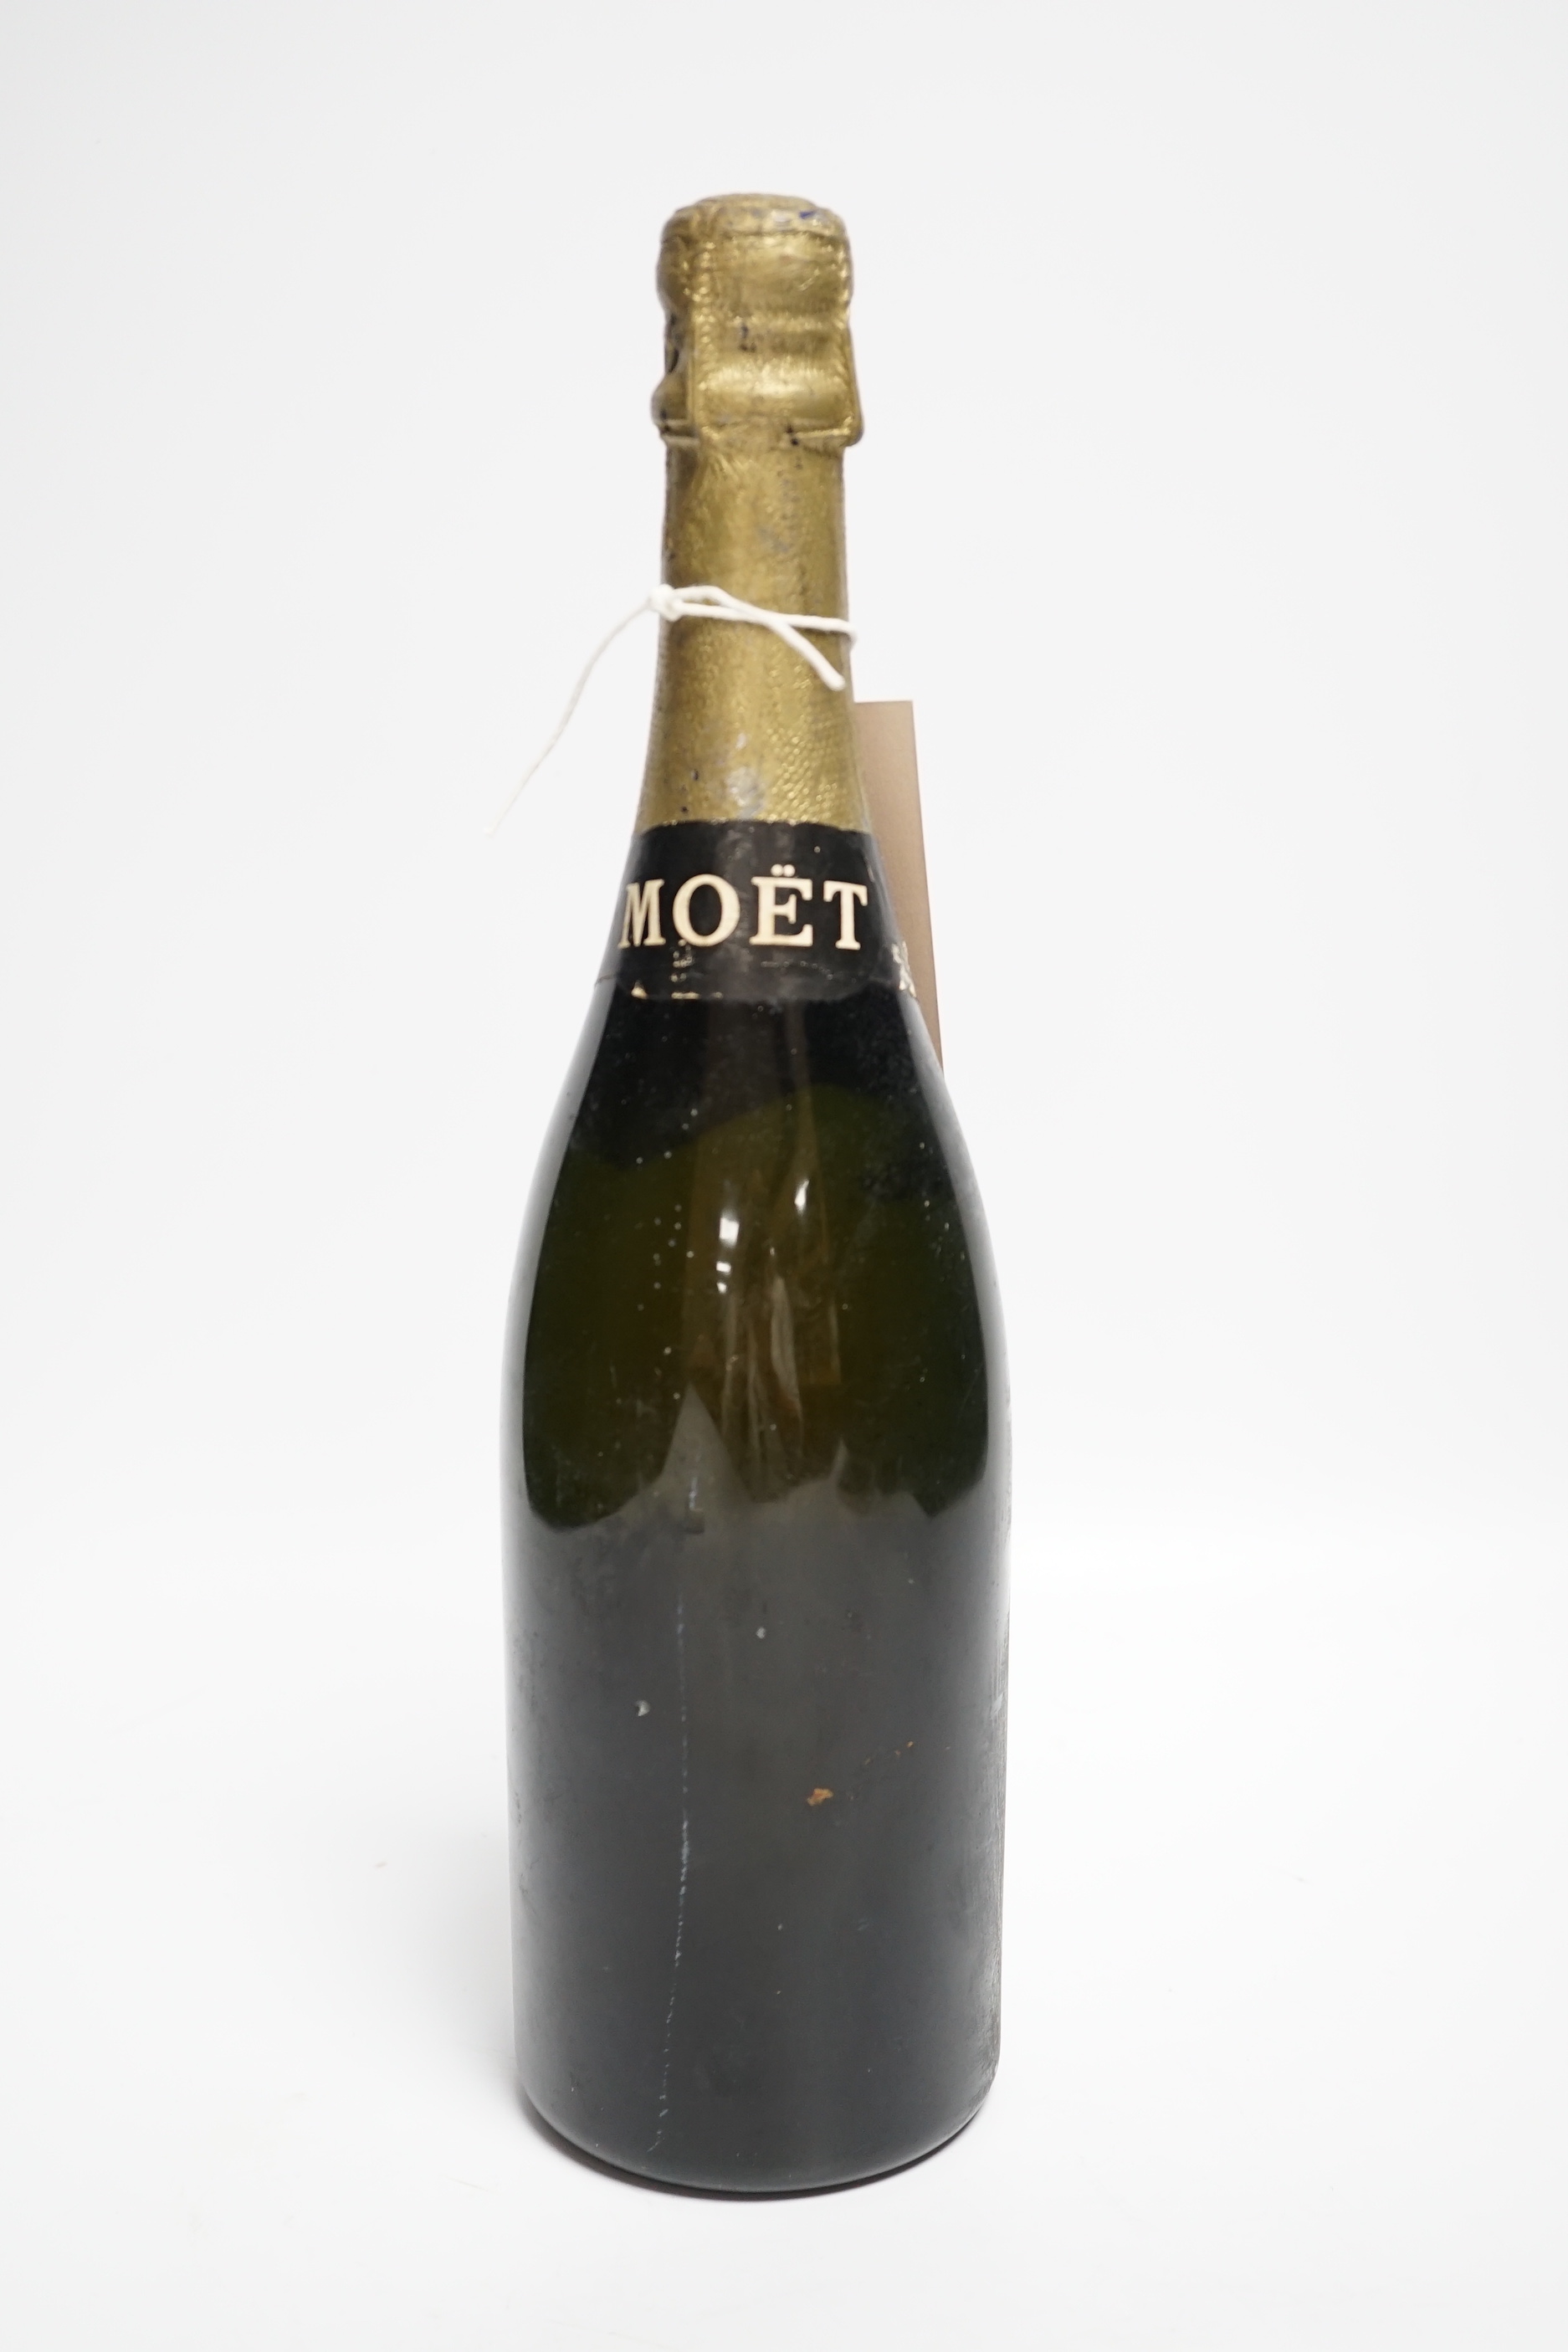 A bottle of Moet et Chandon champagne - Image 6 of 6